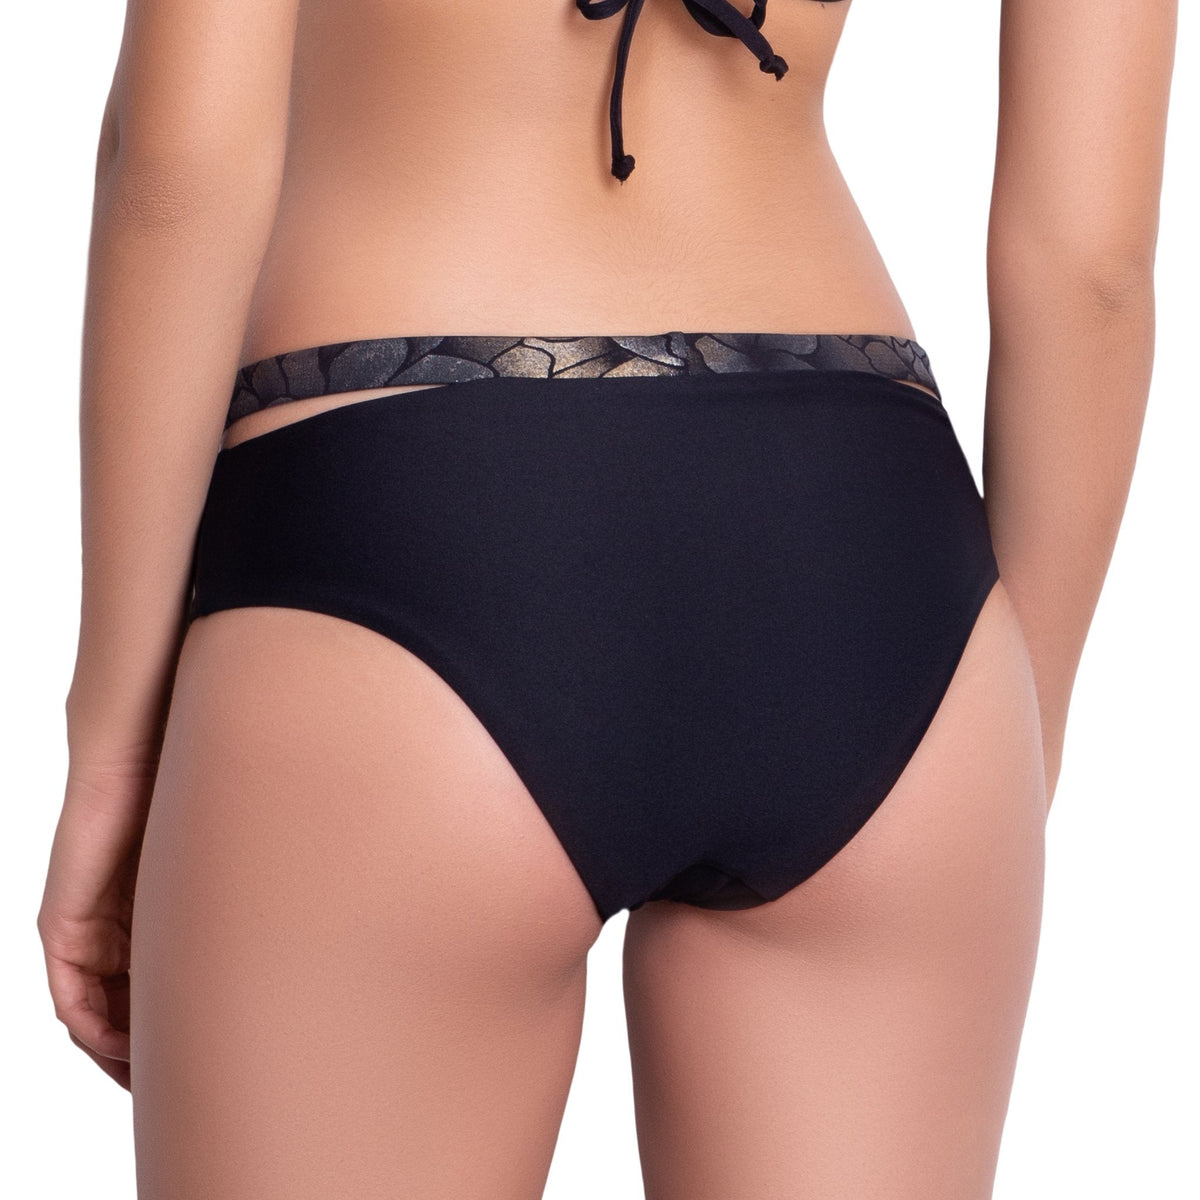 ISABELLE medium rise panty, bronze brocade cutout waistband black bikini bottom by ALMA swimwear ‚Äì back view 